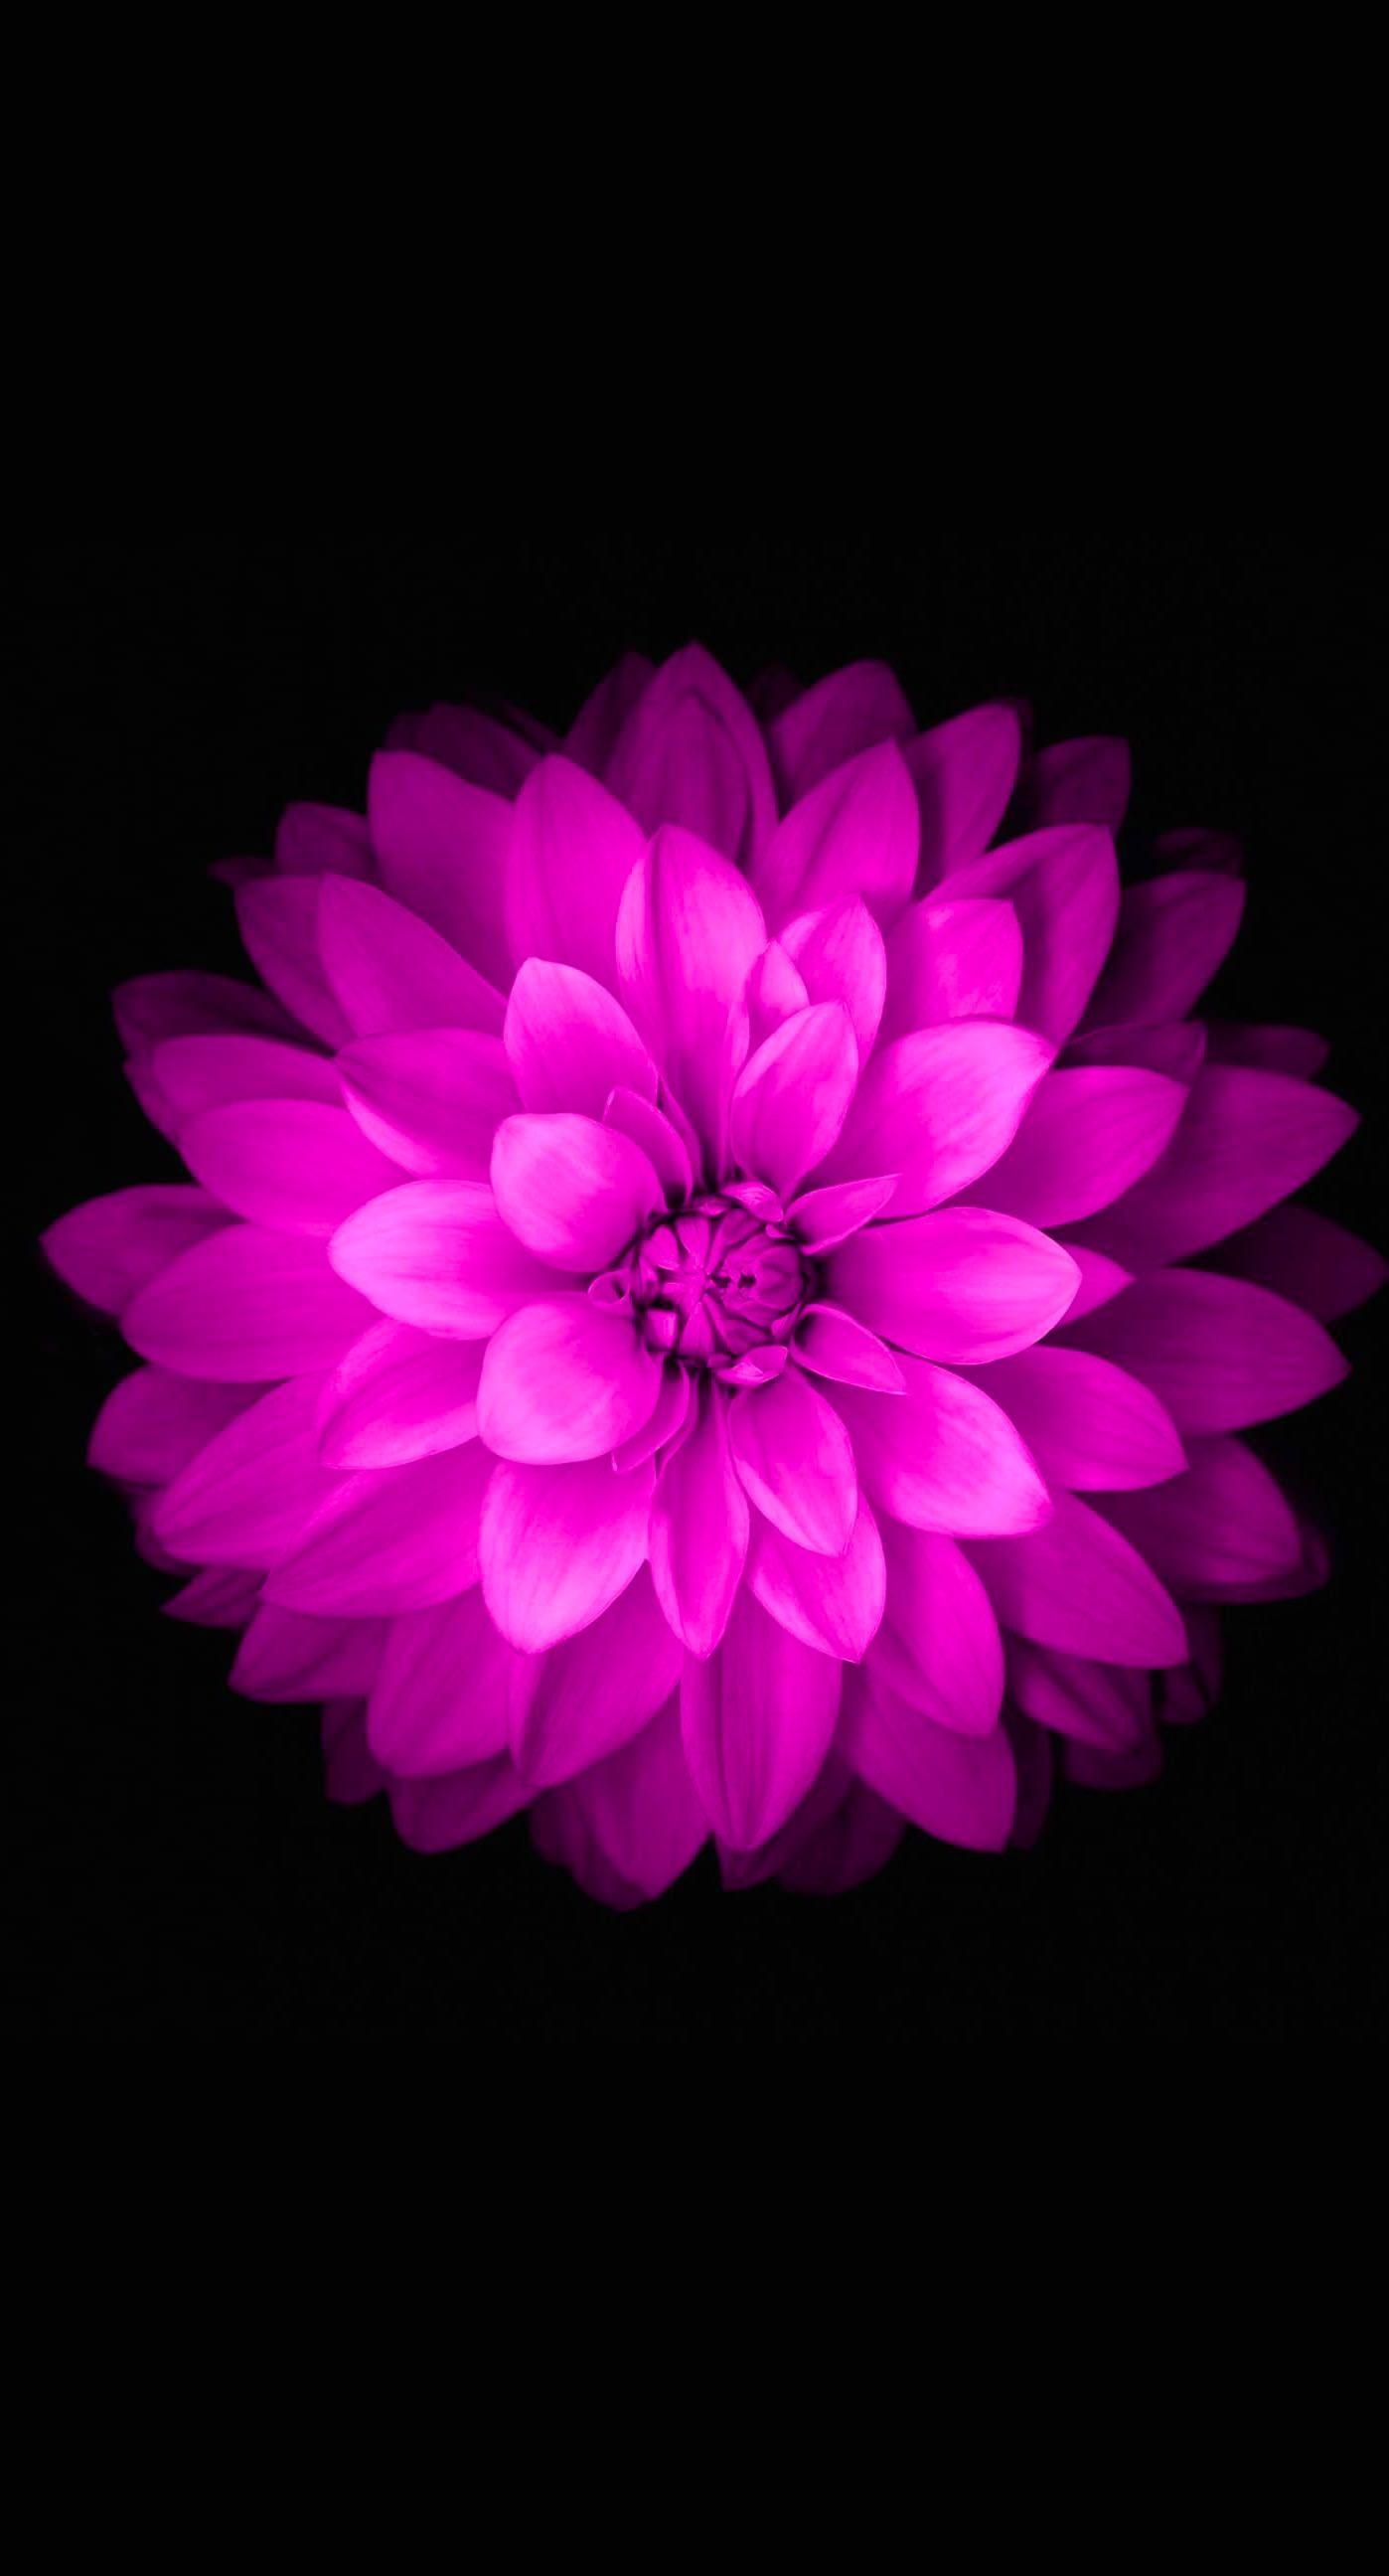 Flower iPhone Wallpaper Free Flower iPhone